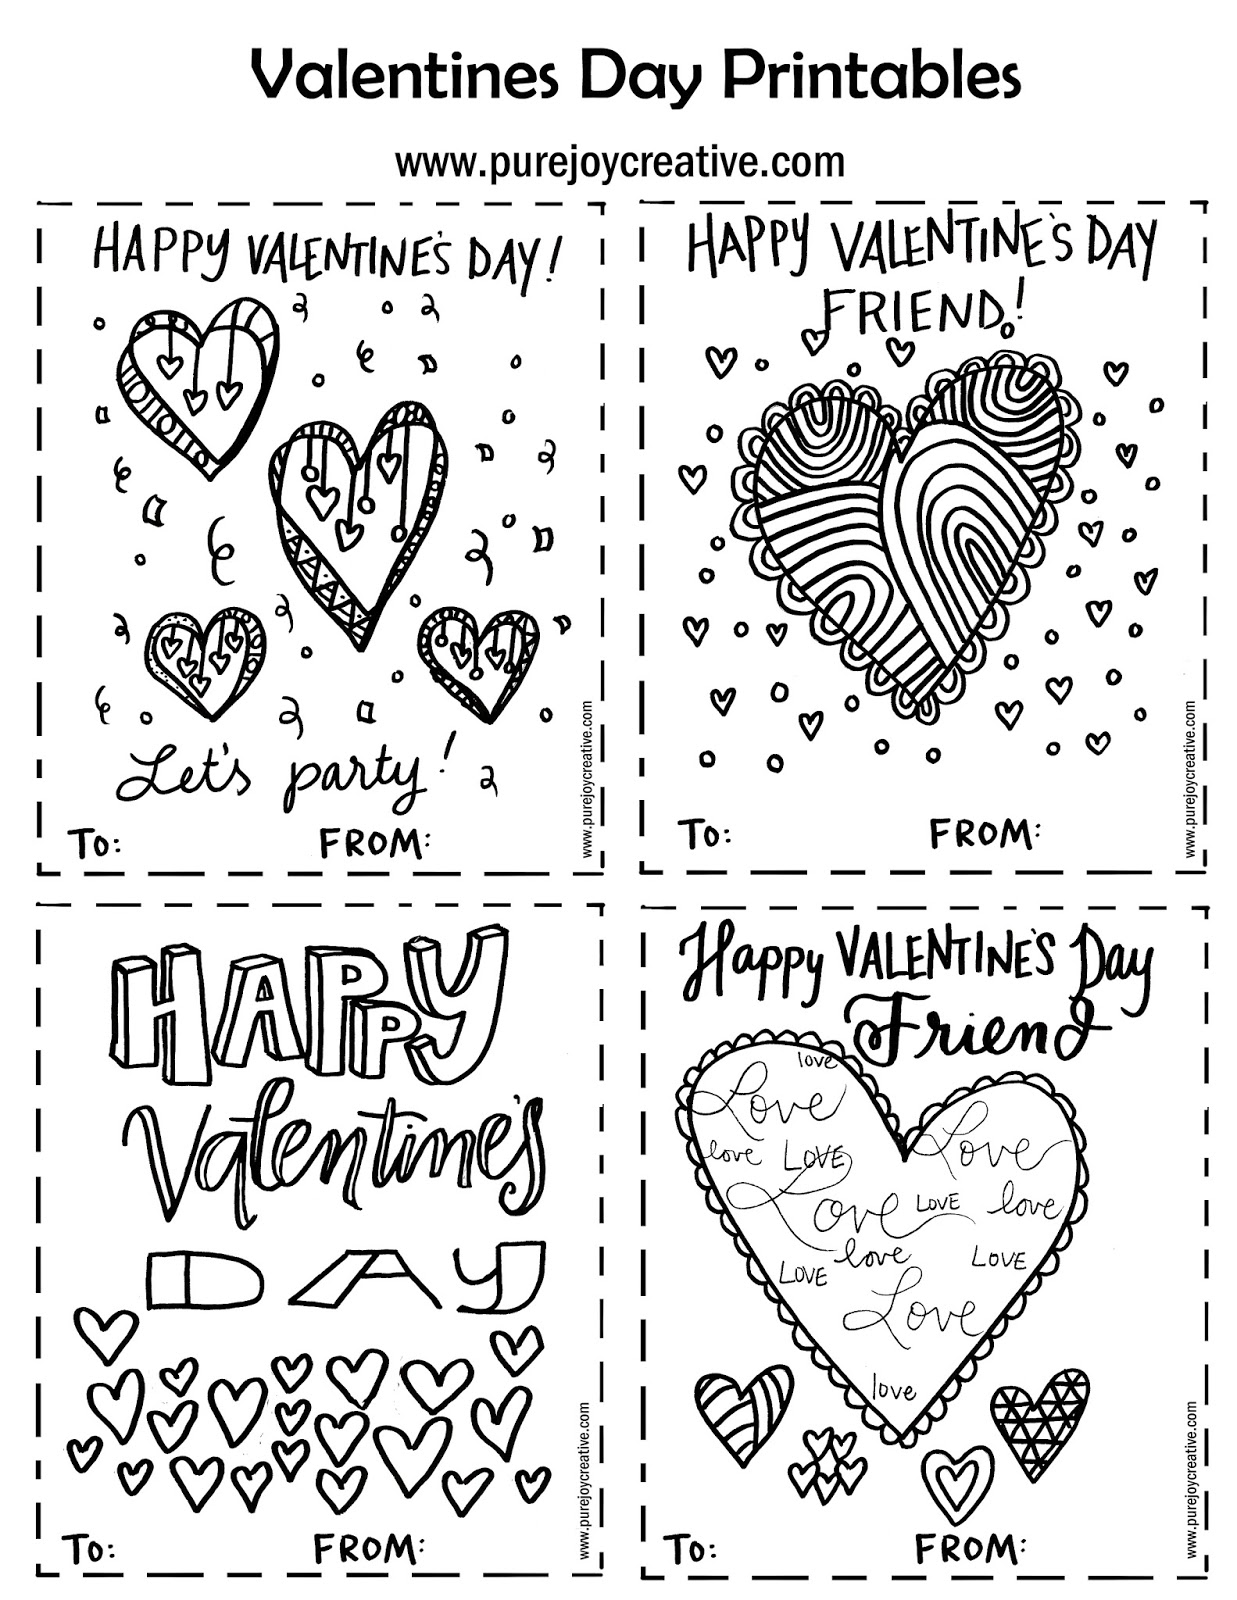 A Glimpse Inside: Fun FREE Valentine Printables!